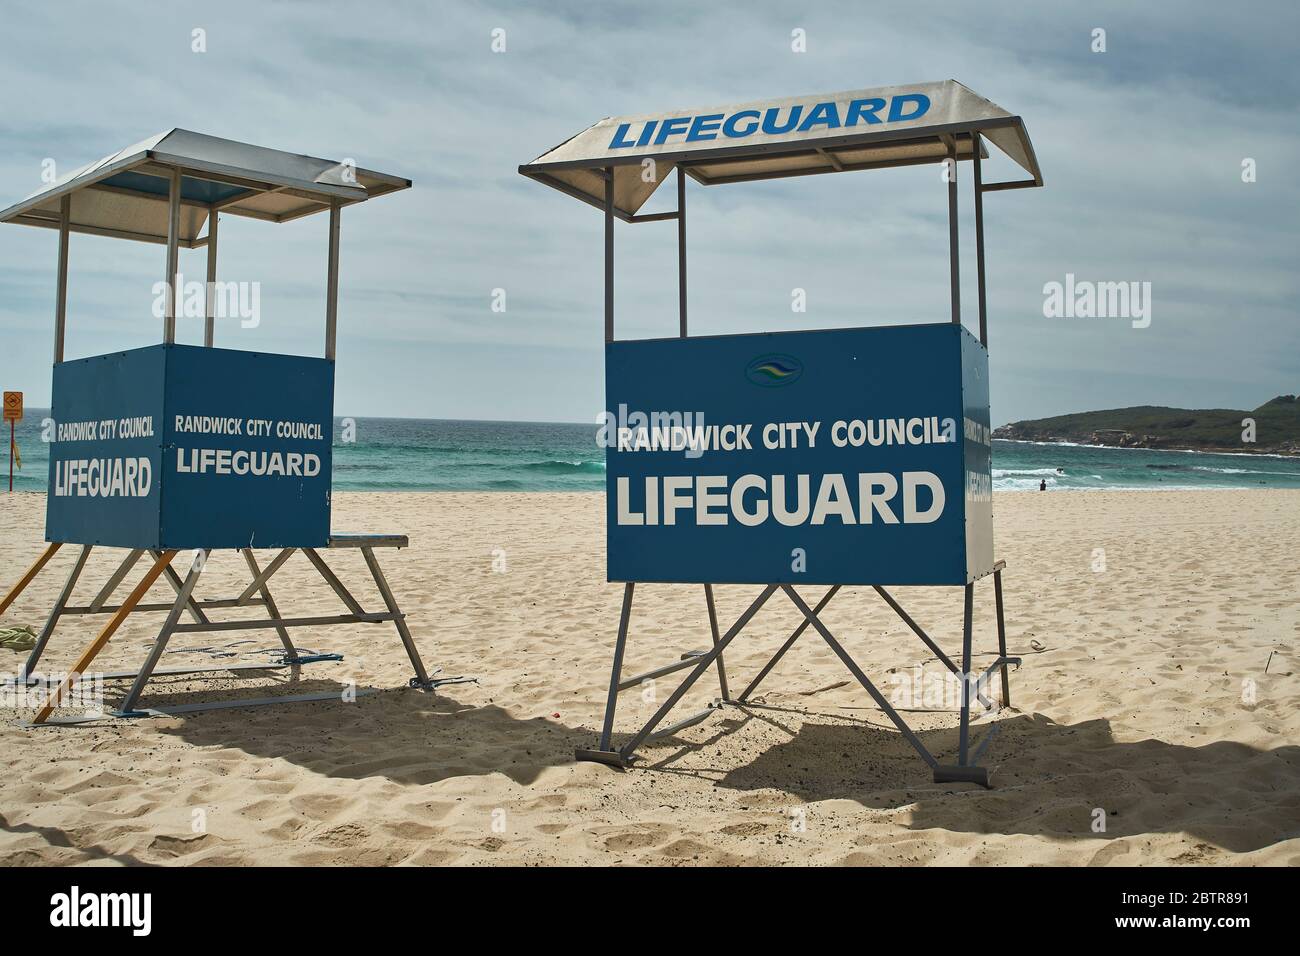 Lifeguard service at the Maroubra beach in Sydney, Australia Stock Photo